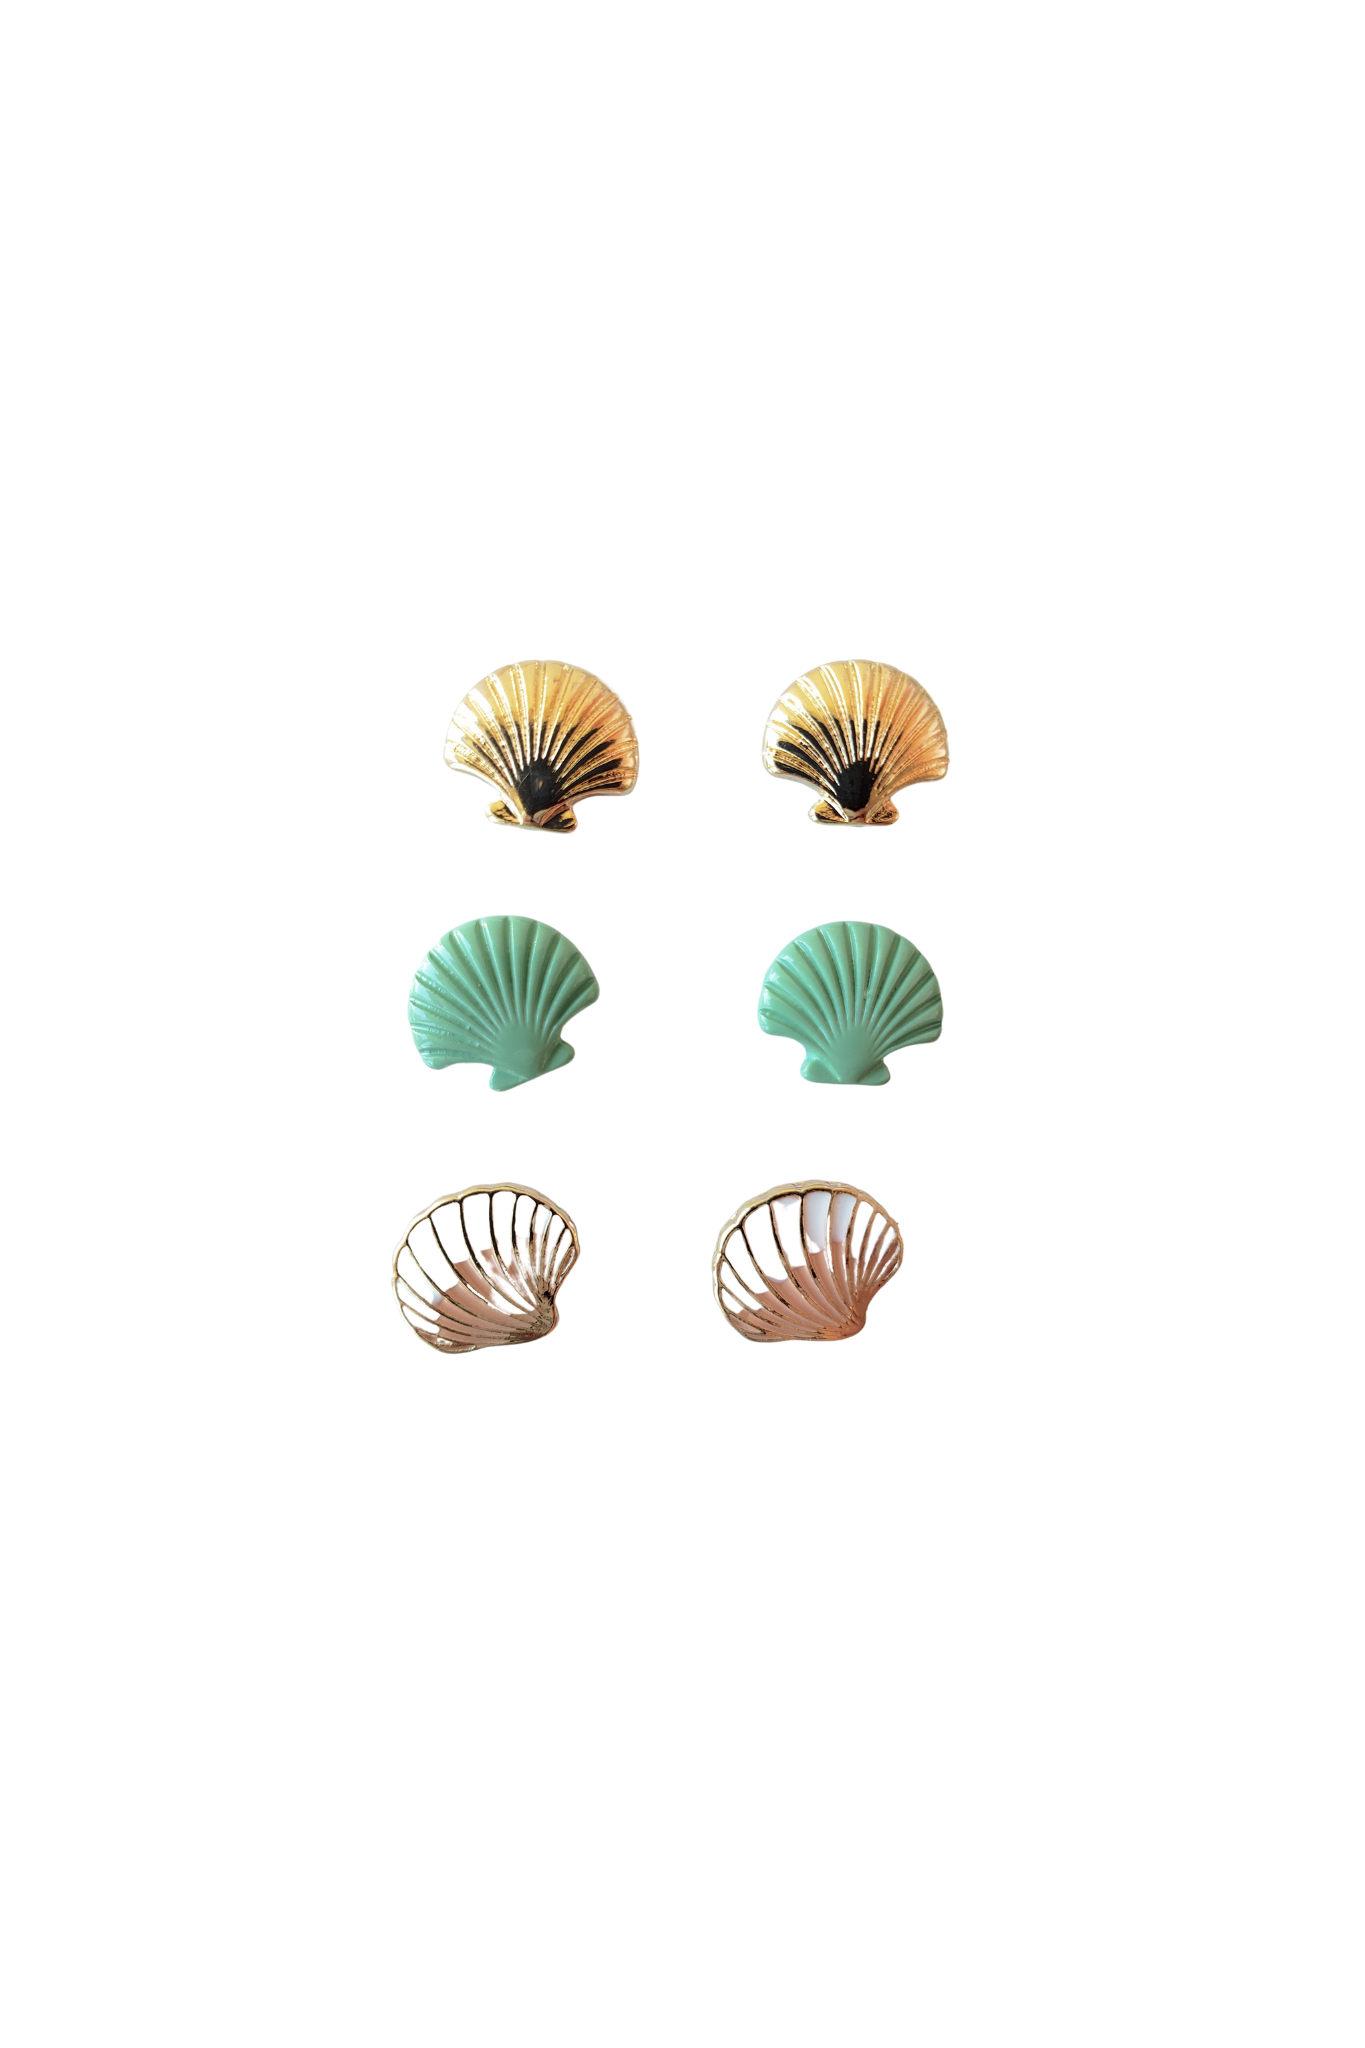 Clam Shell Stud Earrings - Set of 3